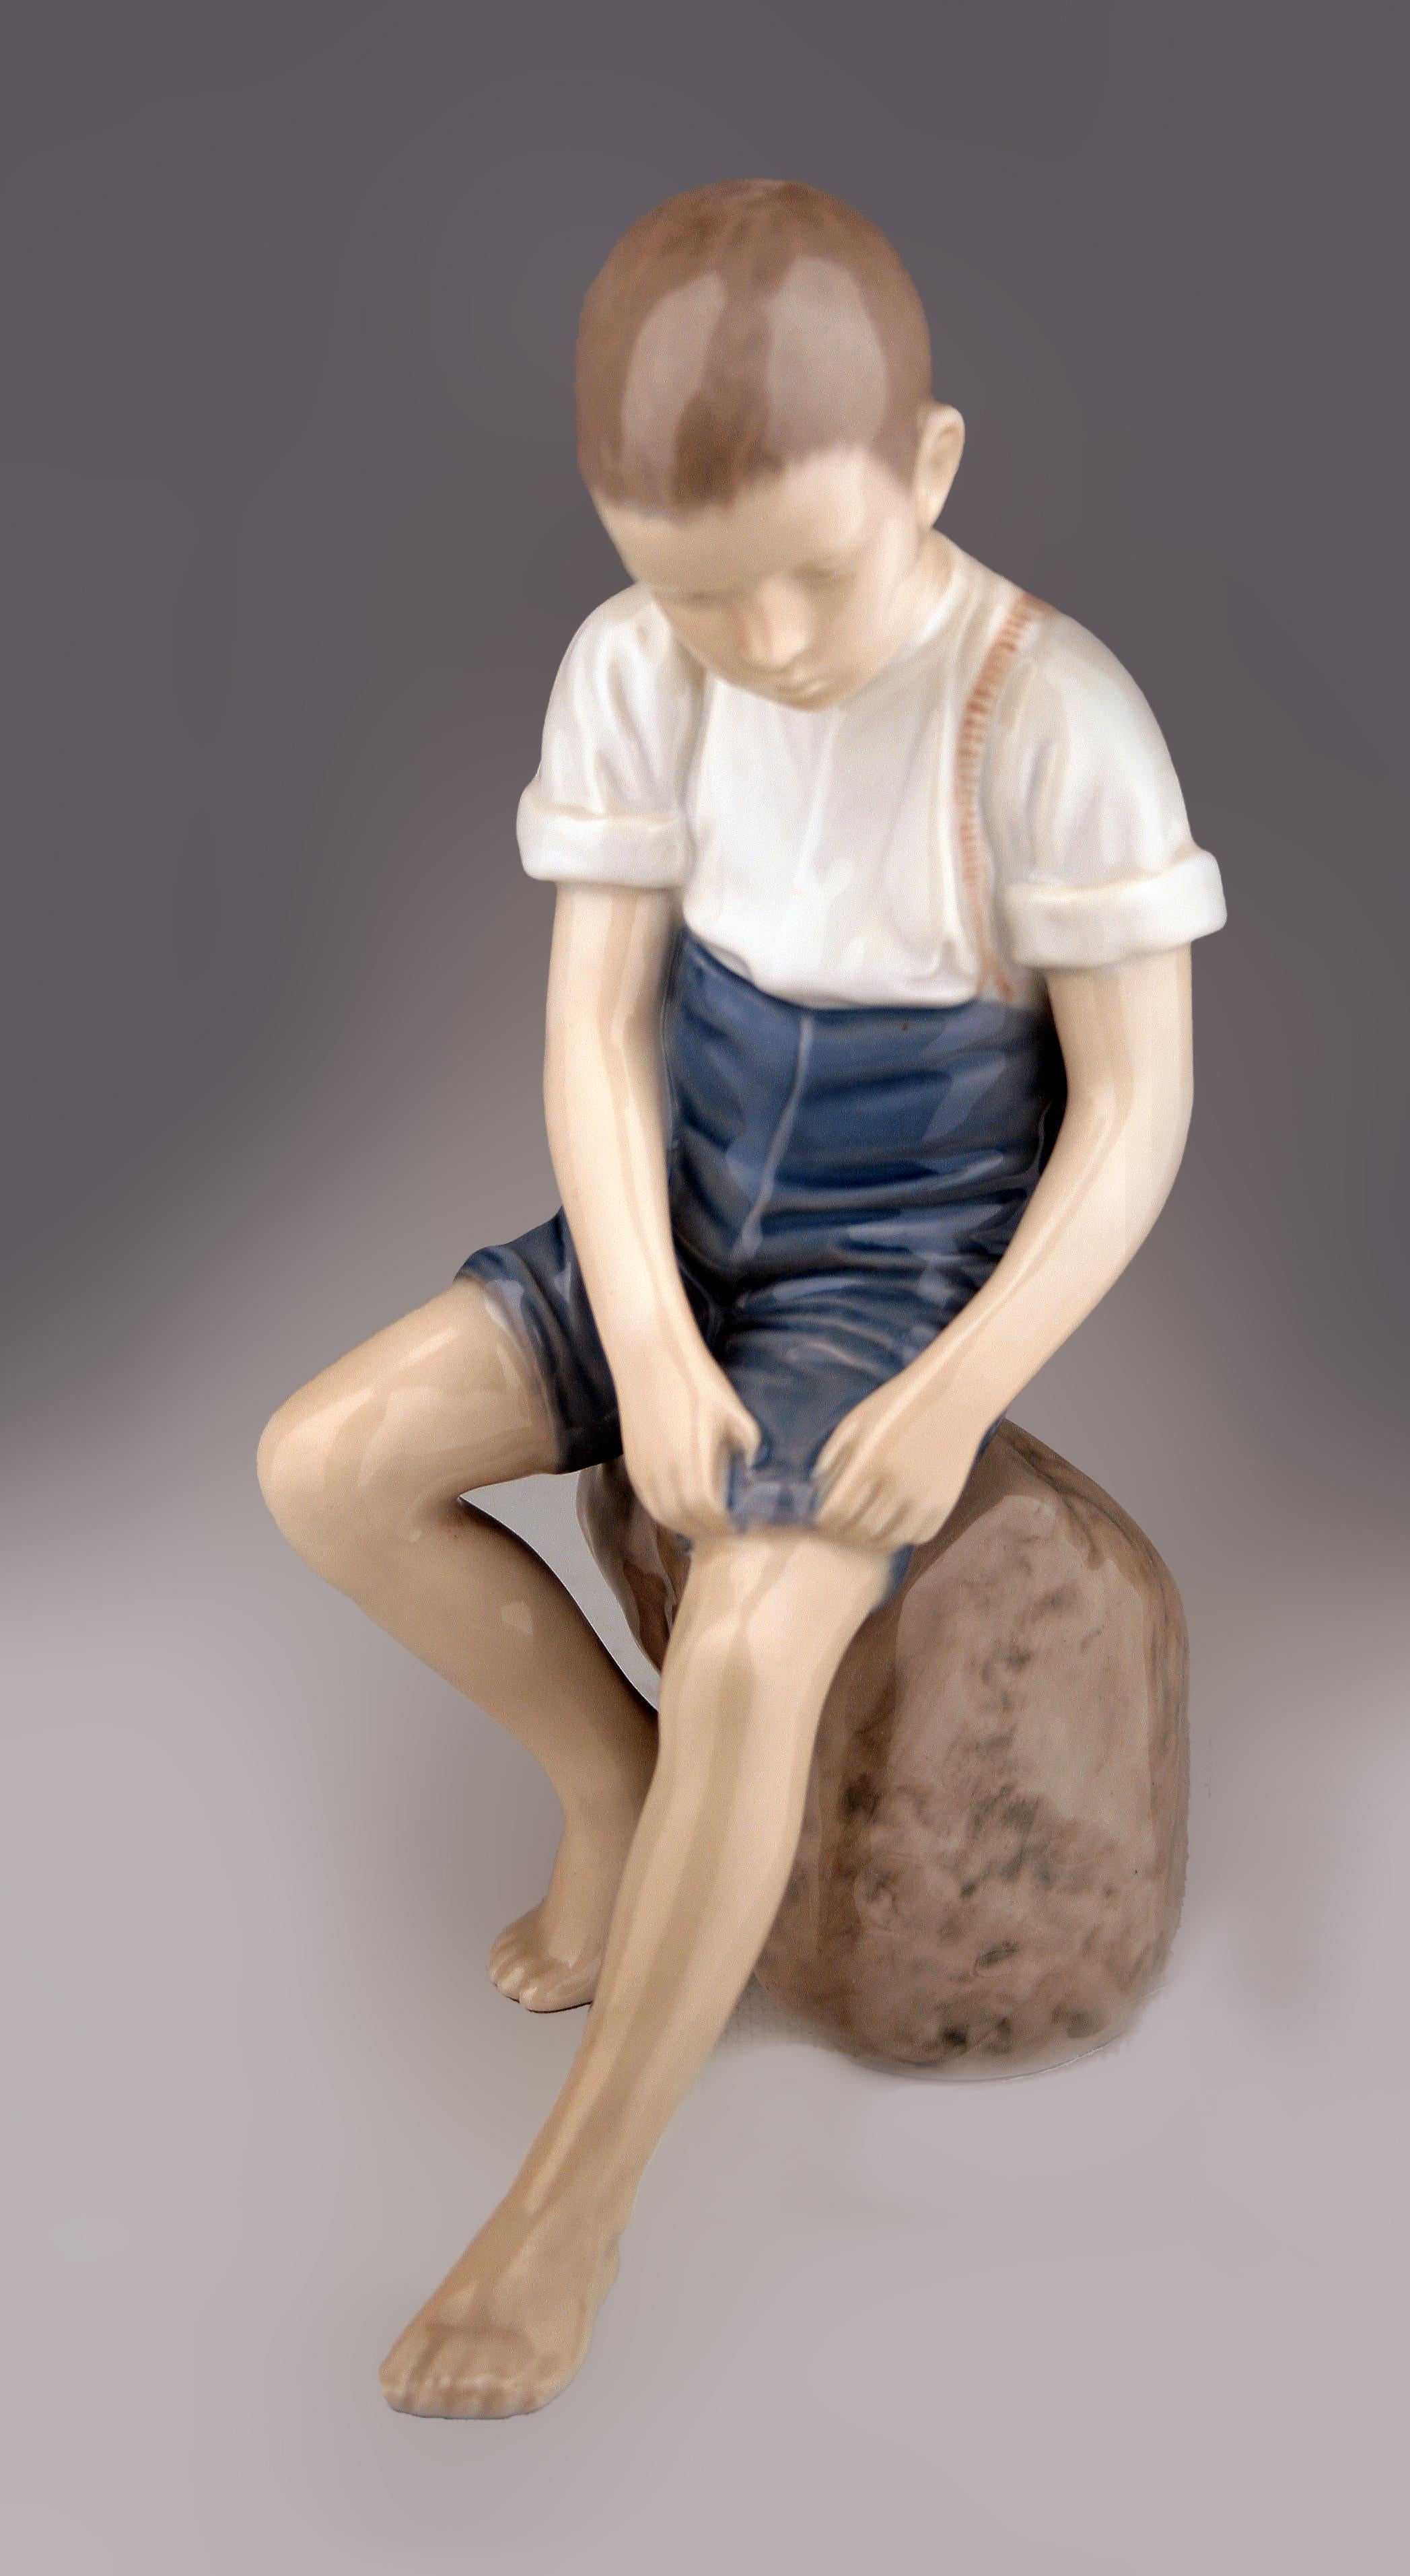 Mid-20th century scandinavian modern glazed porcelain sculpture of a boy sitting o a rock by danish company Bing & Grøndahl

By: Bing & Grøndahl
Material: porcelain, paint, ceramic
Technique: pressed, molded, hand-painted, glazed, polished,